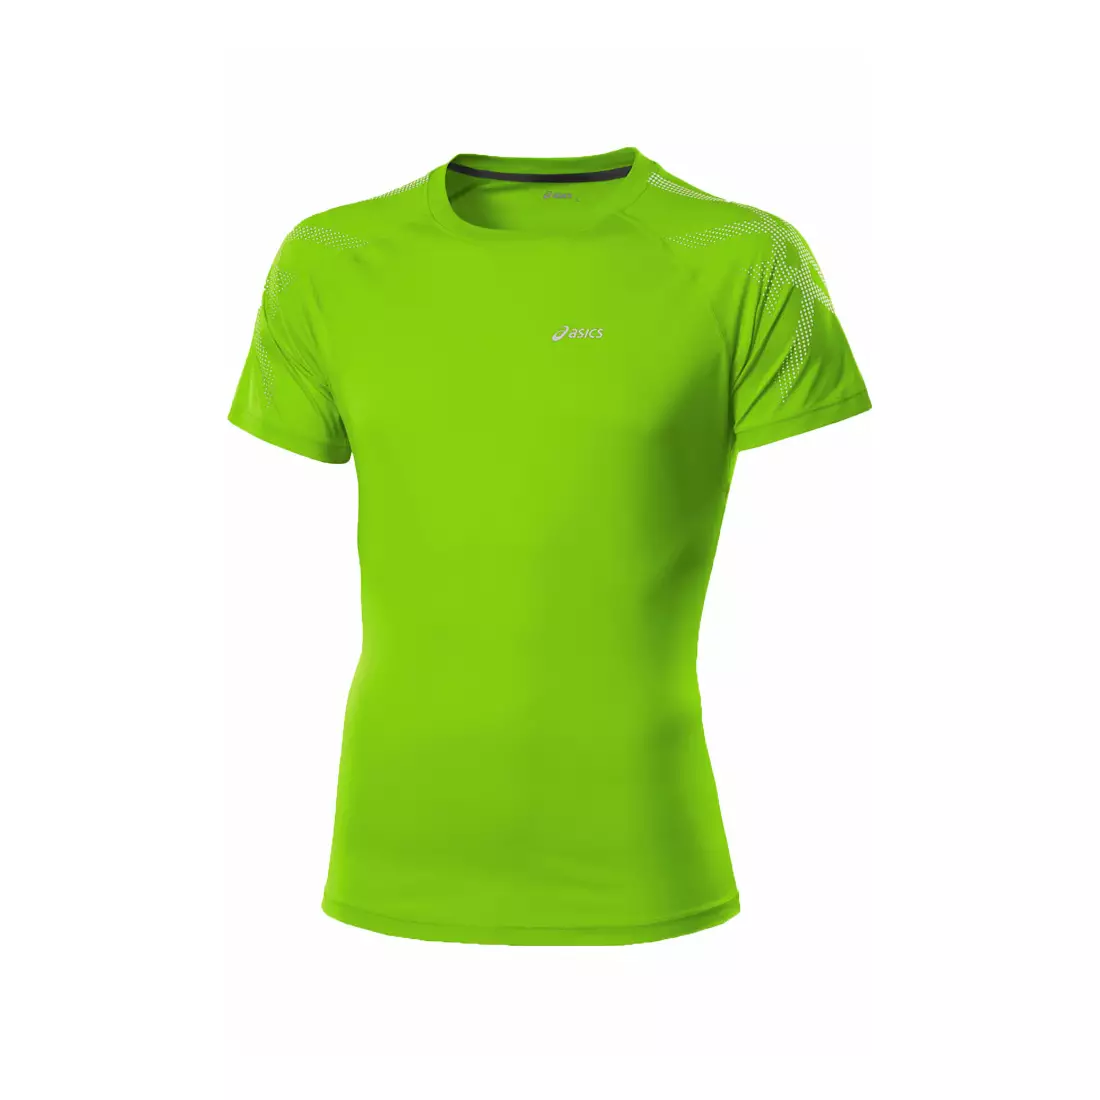 ASICS 339903-0496 - men's running T-shirt, color: Green